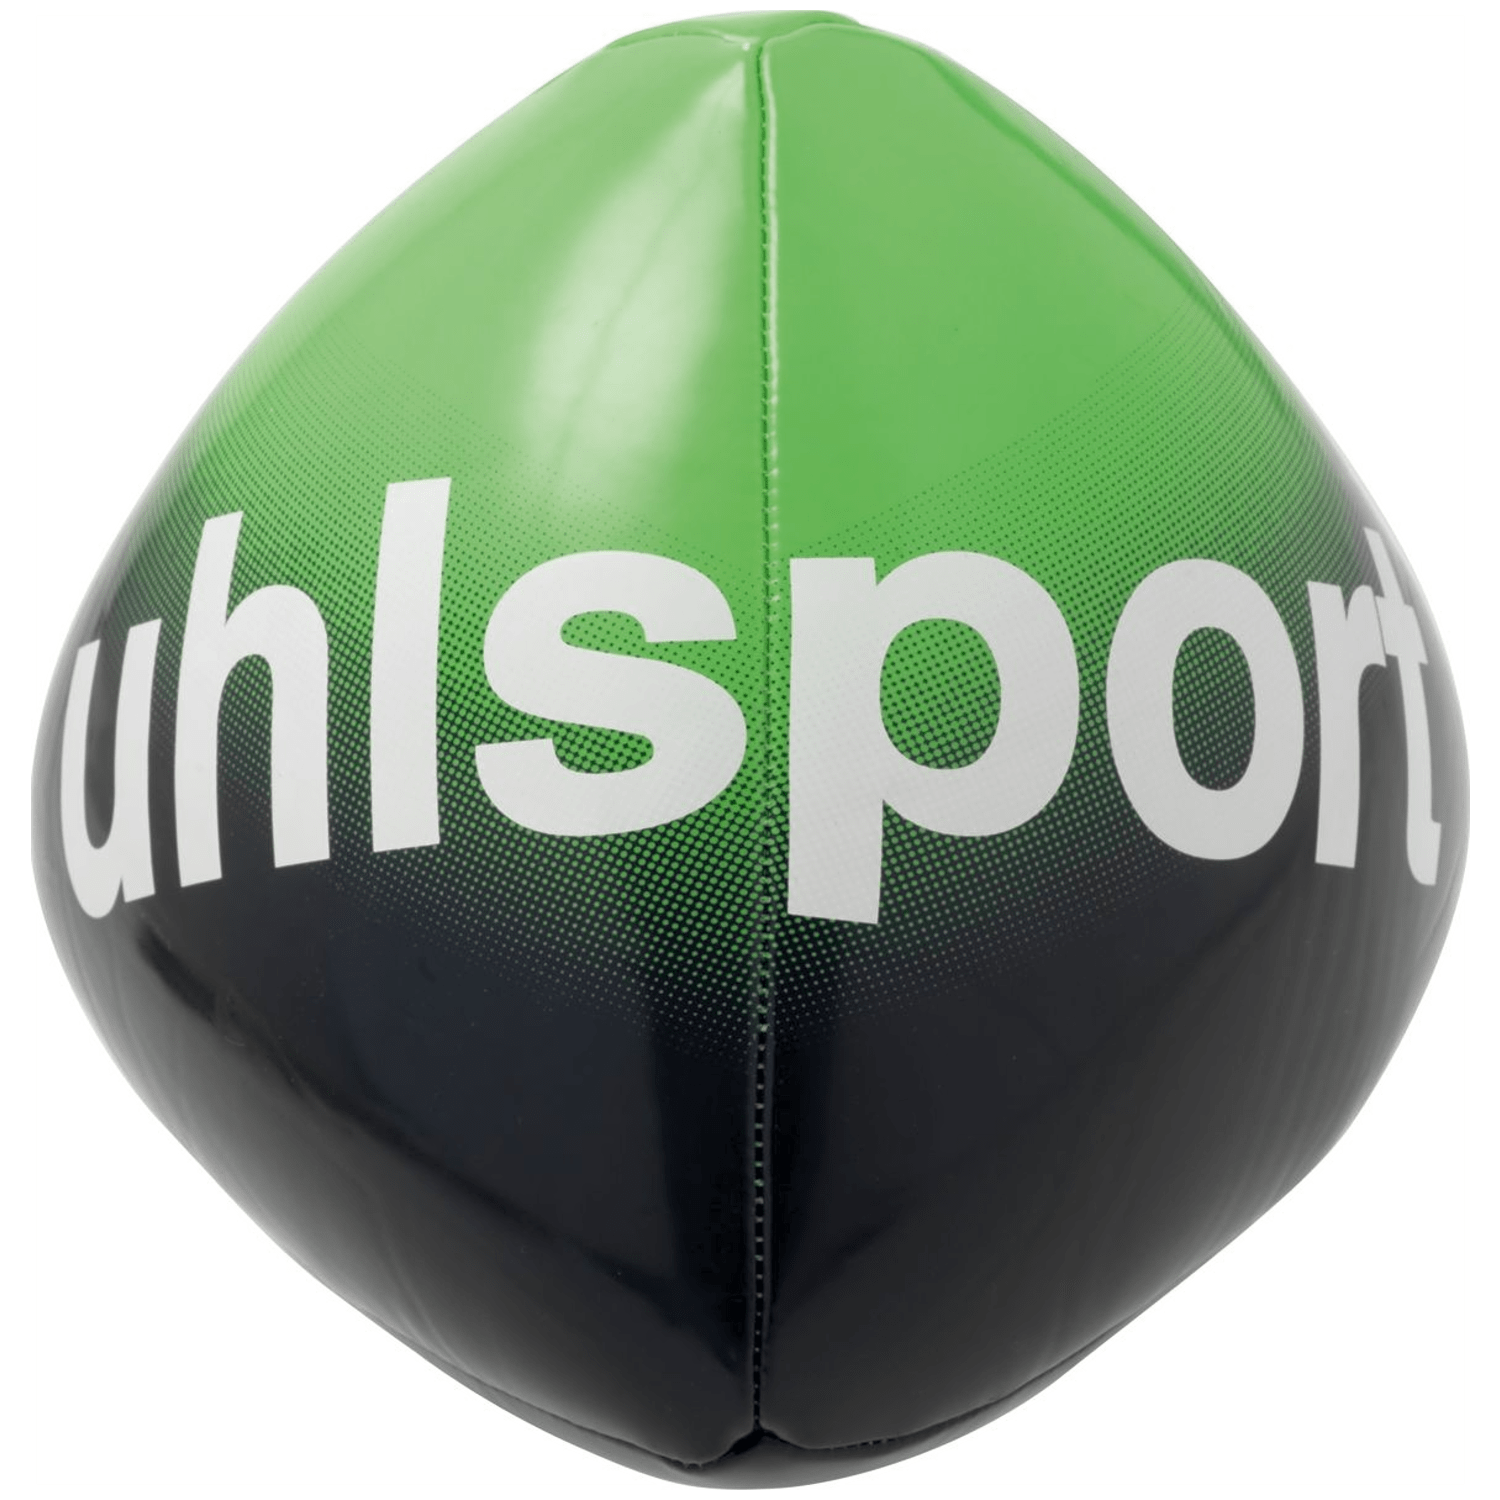 Uhlsport Reflex Ball Fußball